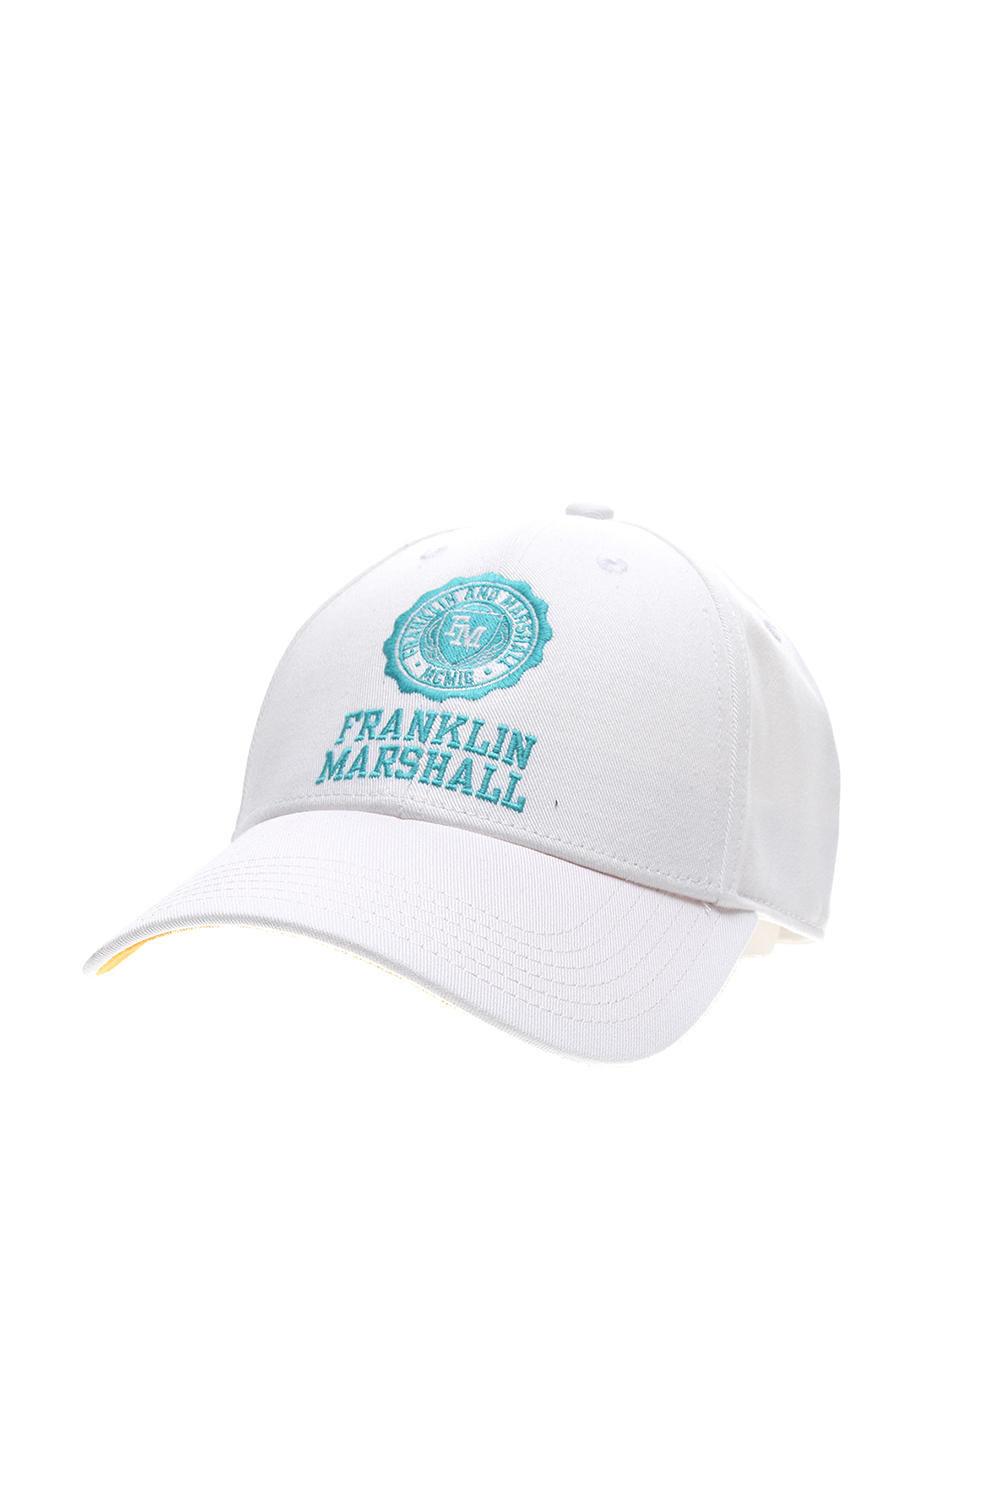 FRANKLIN & MARSHALL – Ανδρικό καπέλο baseball FRANKLIN & MARSHALL λευκό 1809056.0-0091